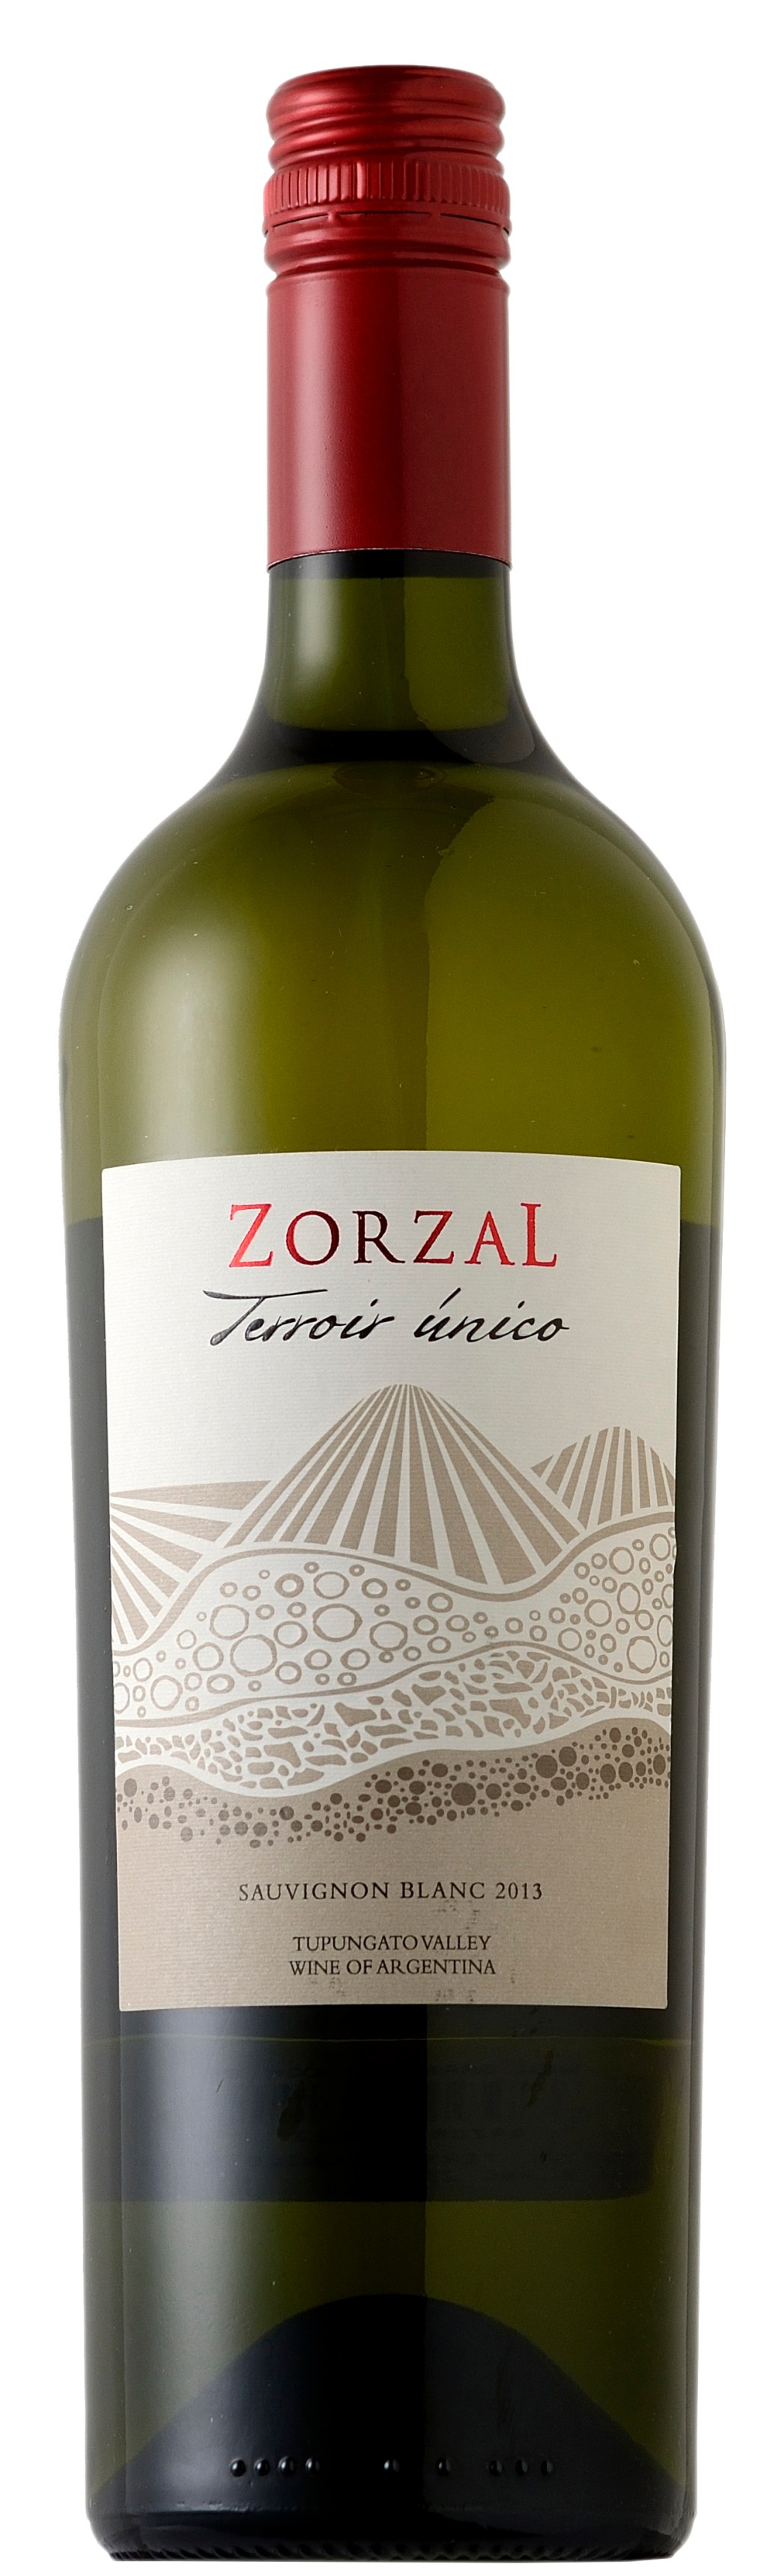 Vinho Zorzal Terroir Único Sauvignon Blanc 2015 - Grand Cru